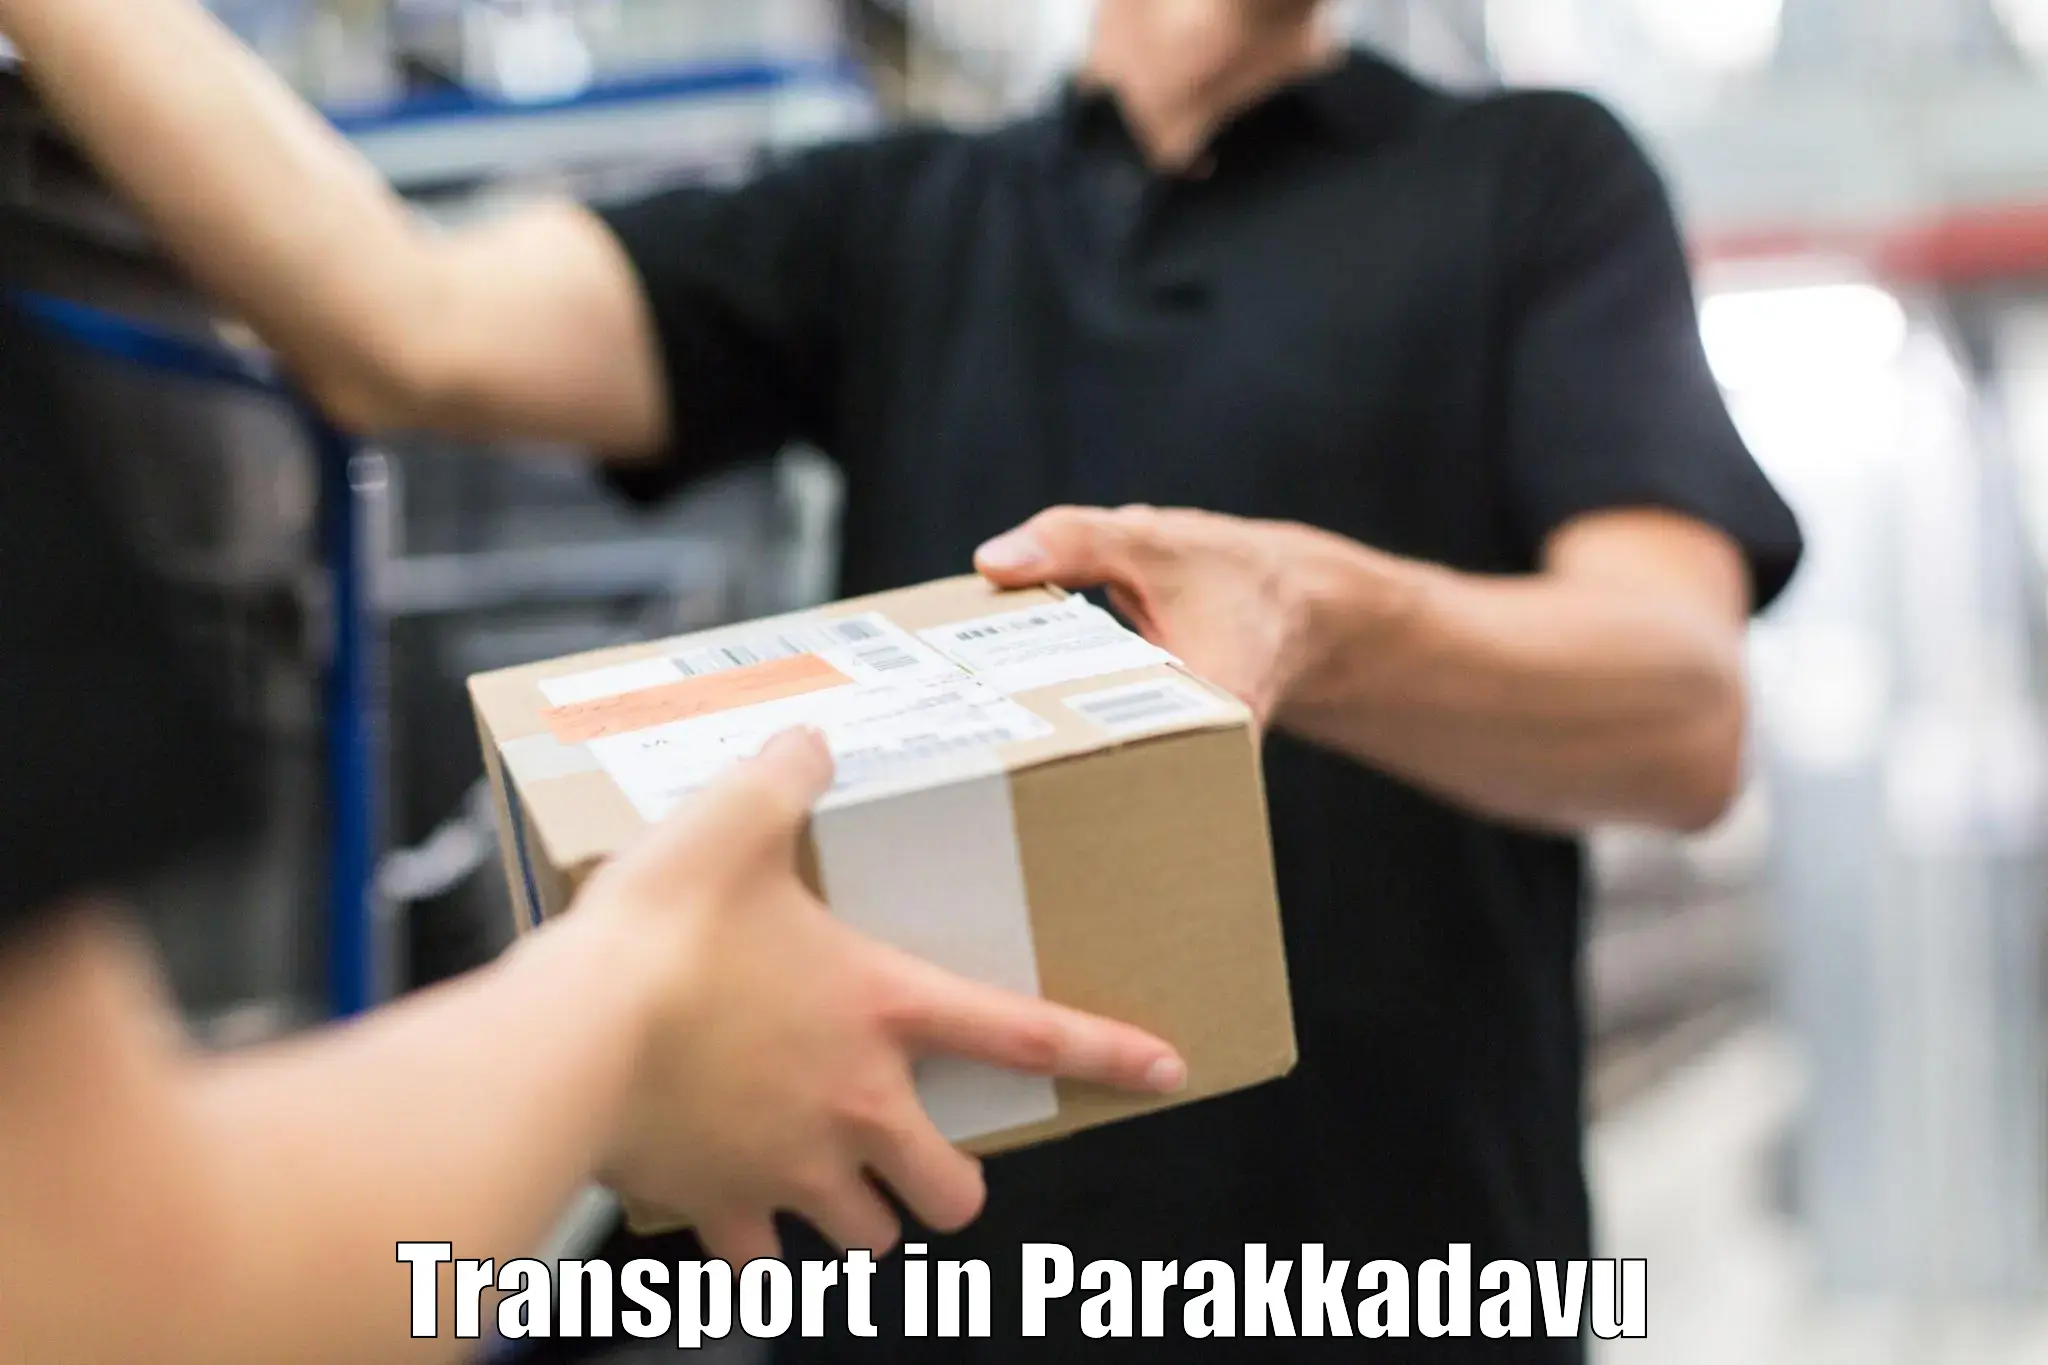 Vehicle transport services in Parakkadavu